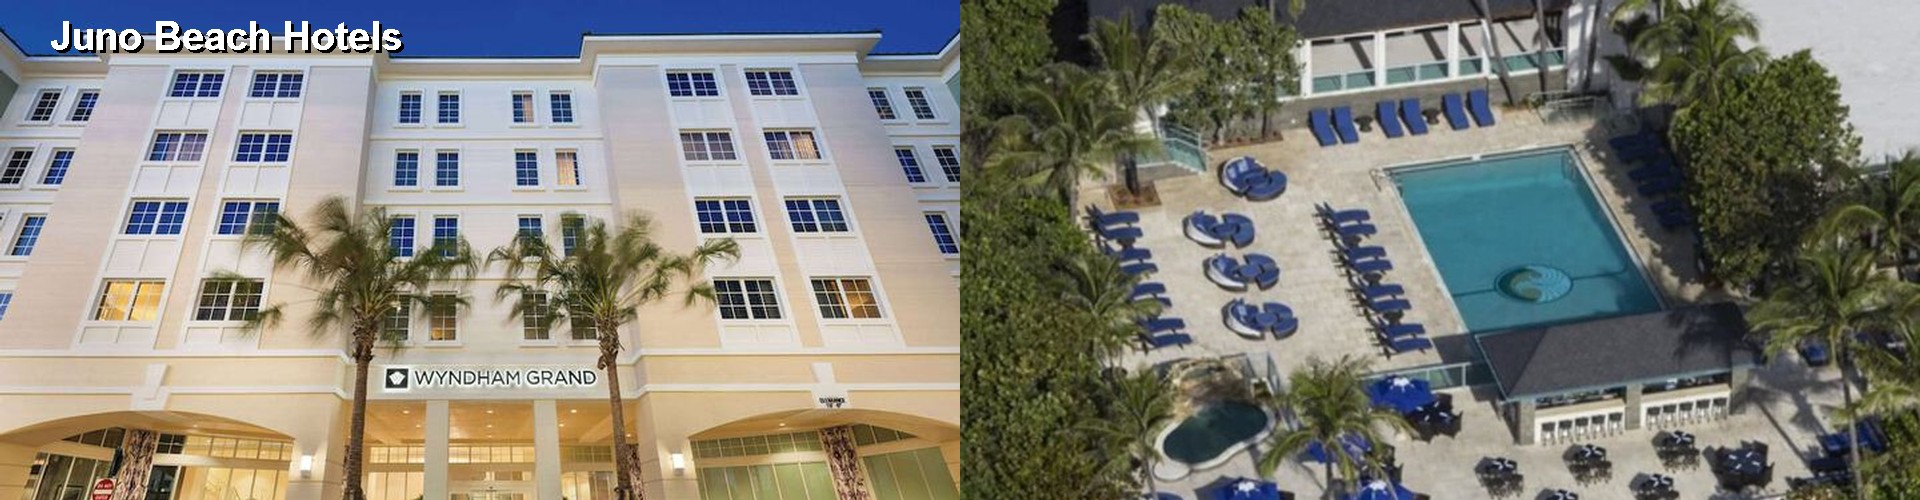 5 Best Hotels near Juno Beach